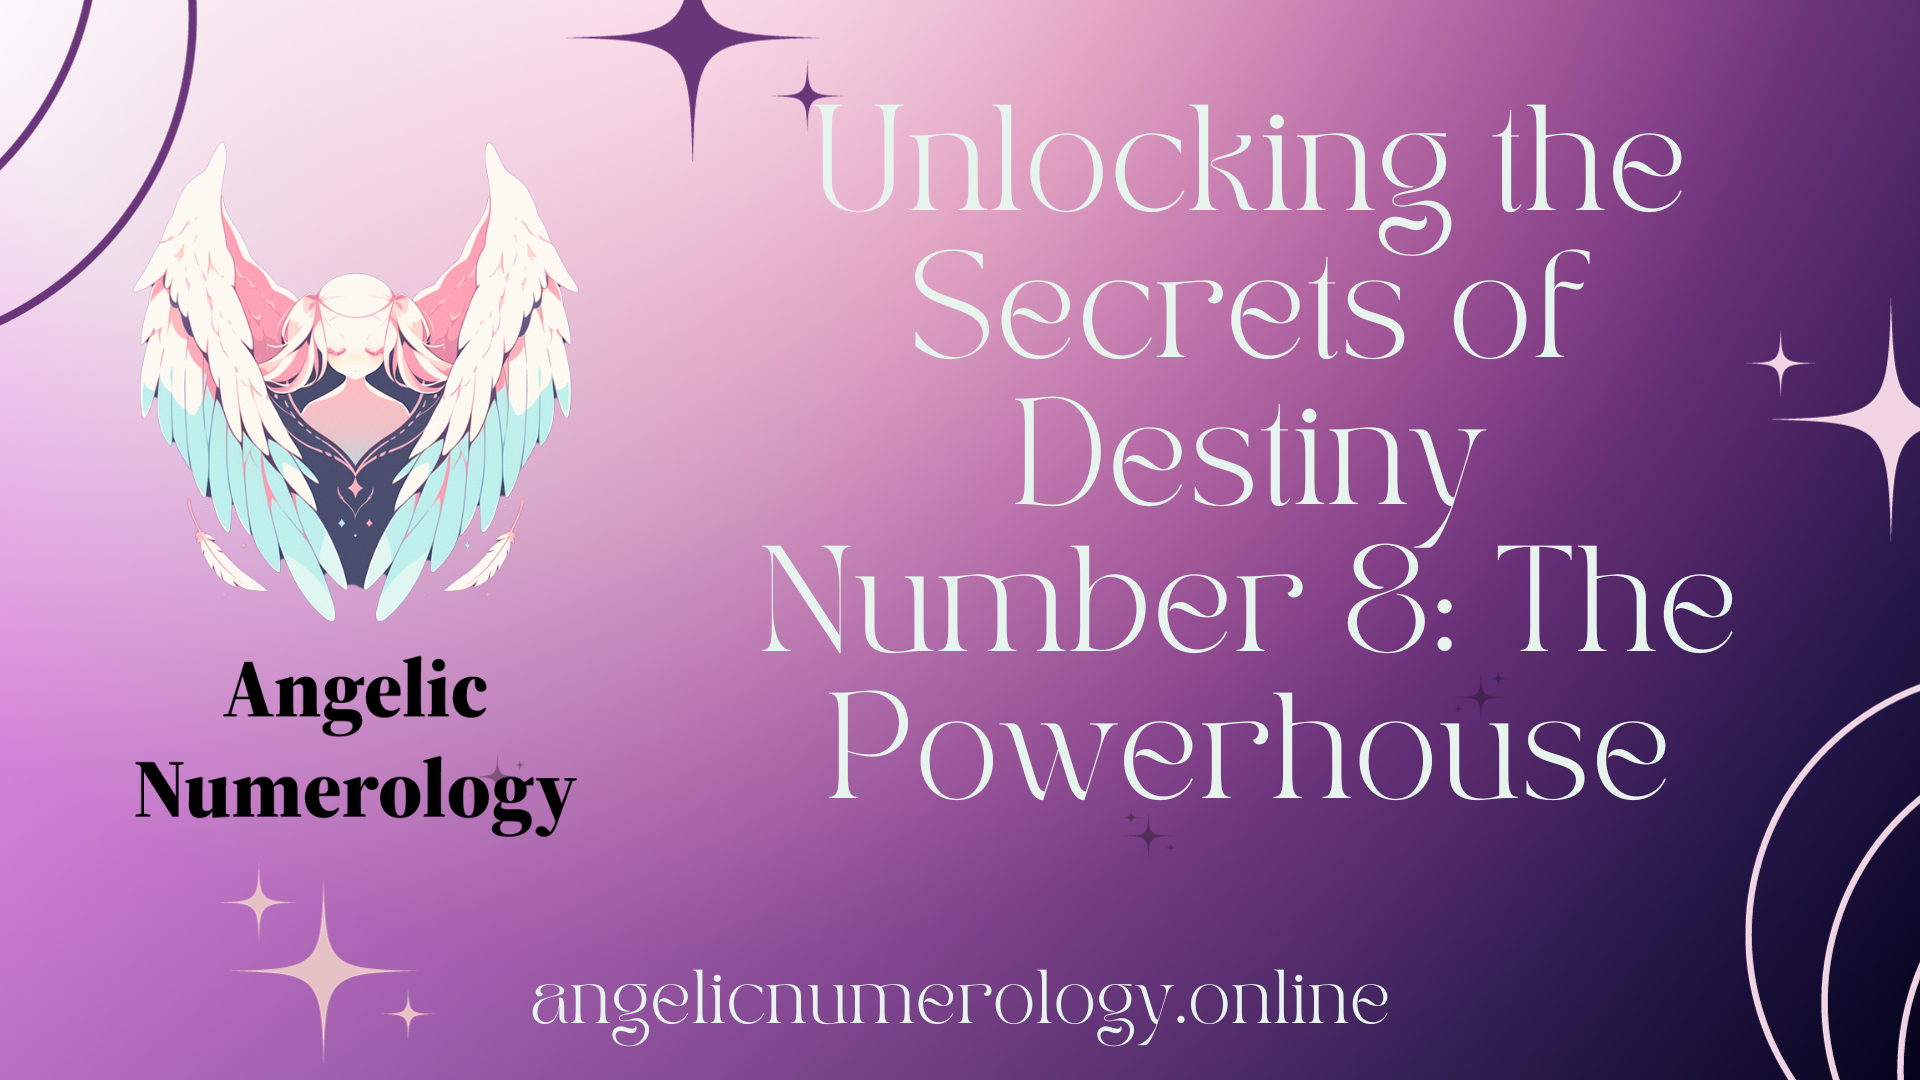 Unlocking the Secrets of Destiny Number 8: The Powerhouse